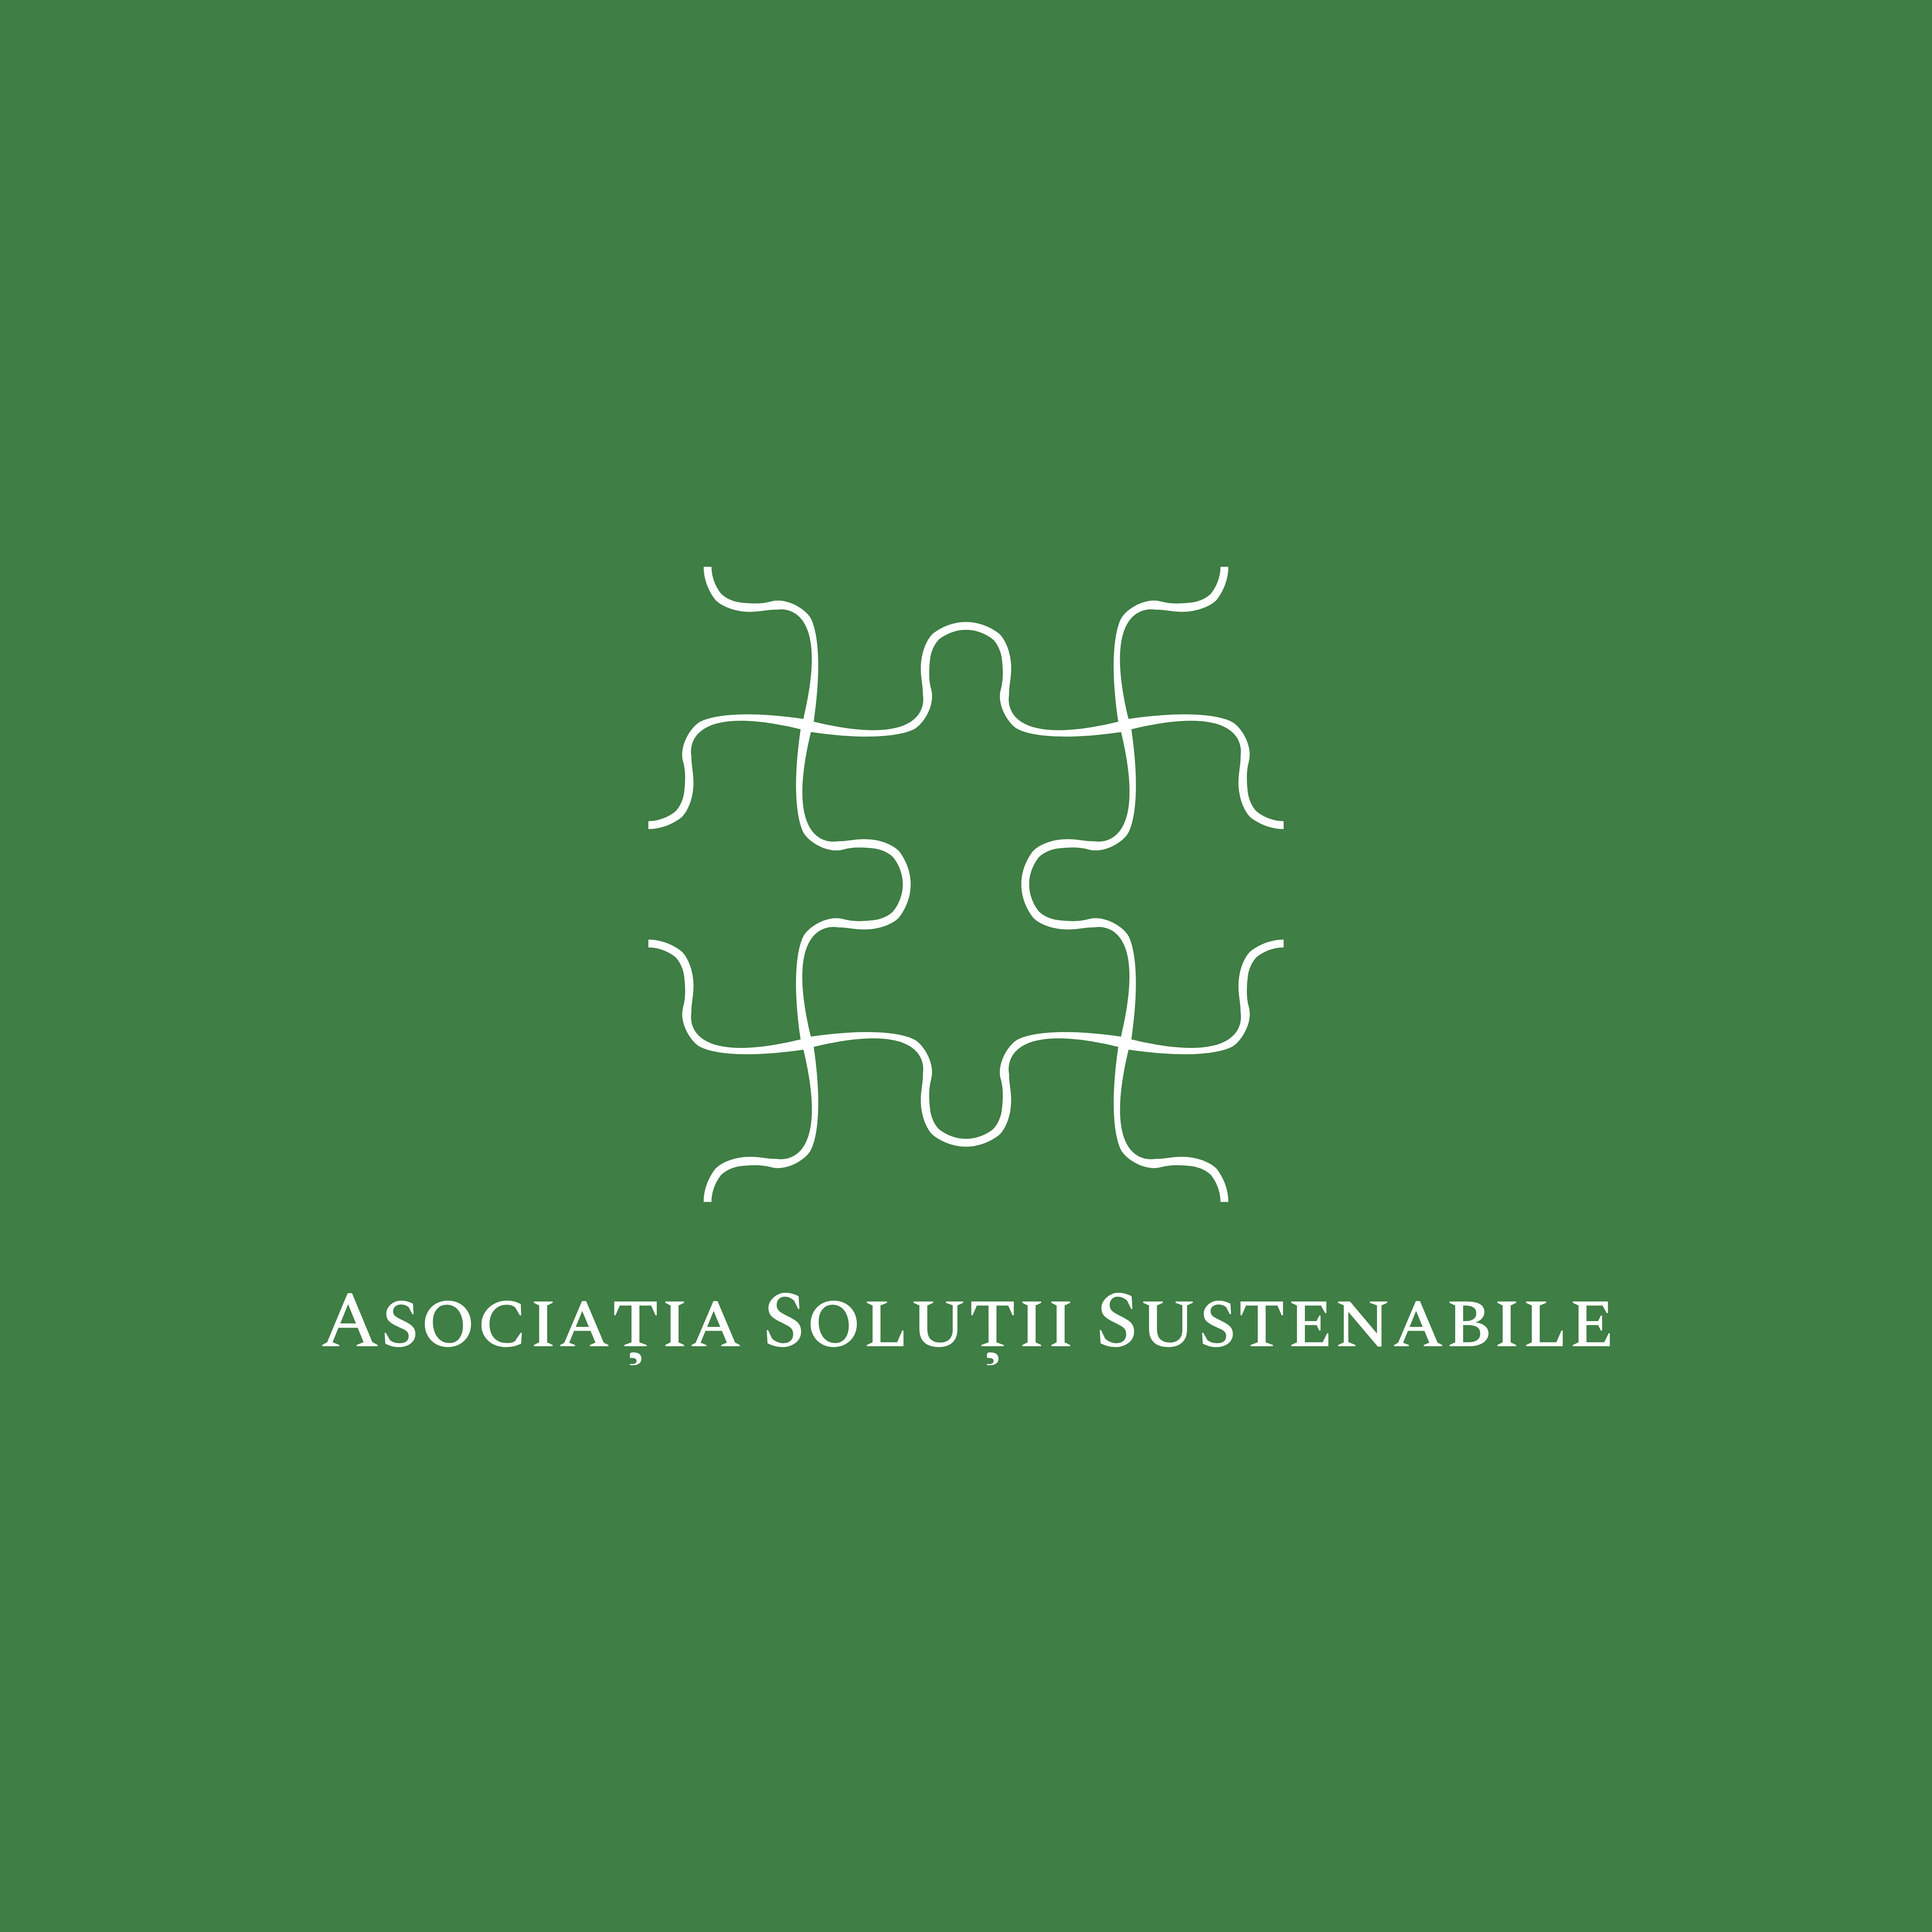 Soluții Sustenabile logo